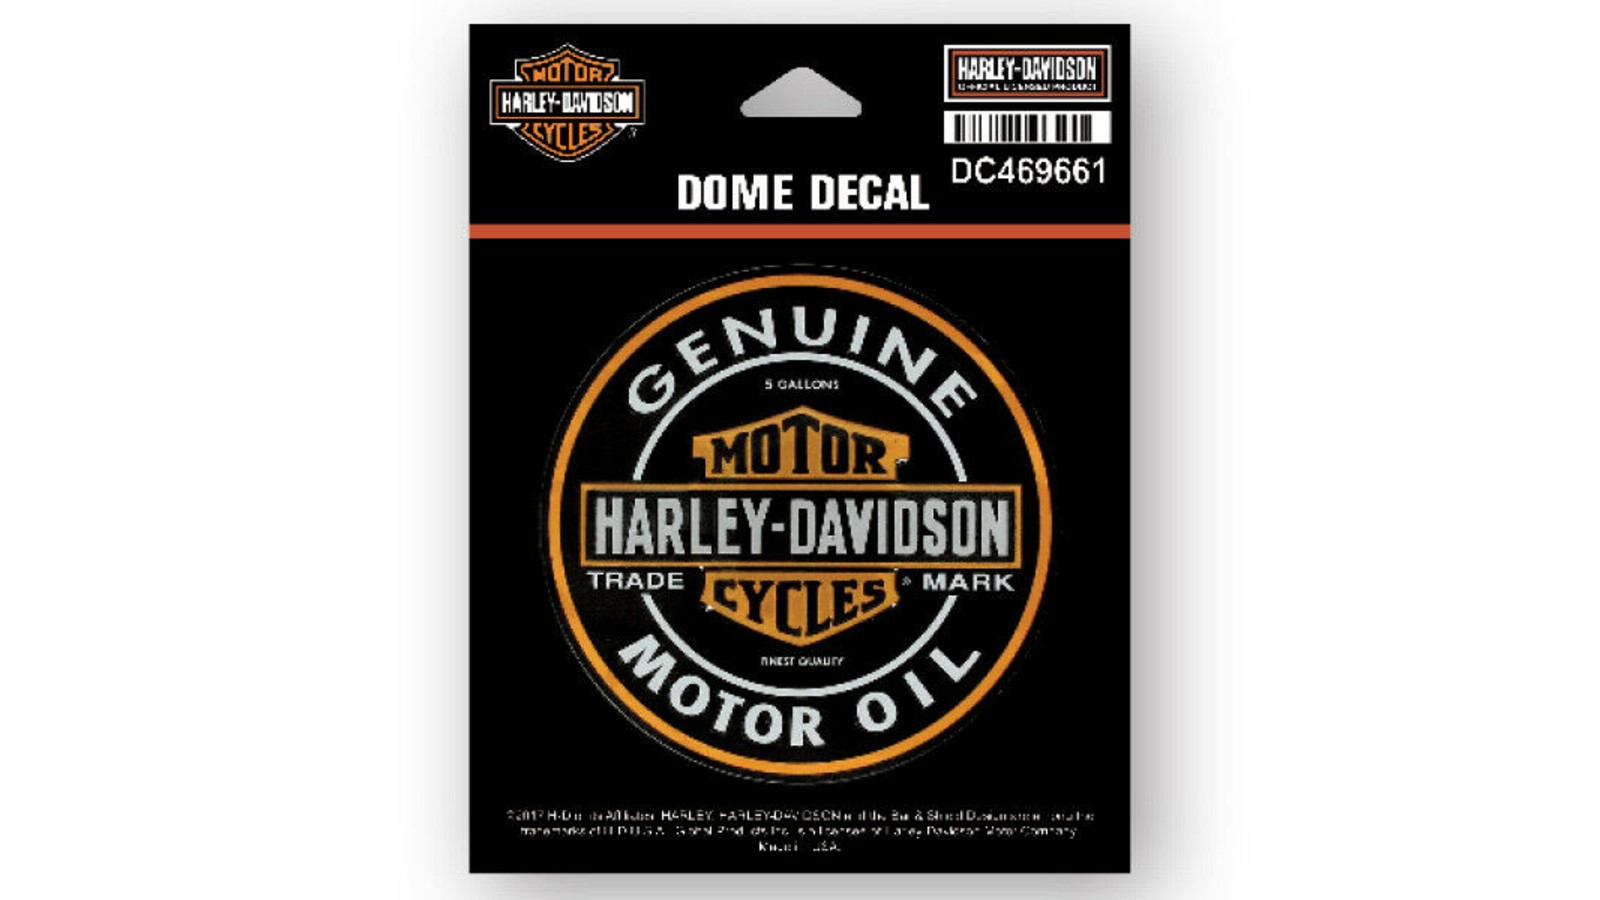 Harley-Davidson Aufkleber/Dome Decal GENUINE MOTOR OIL DC4